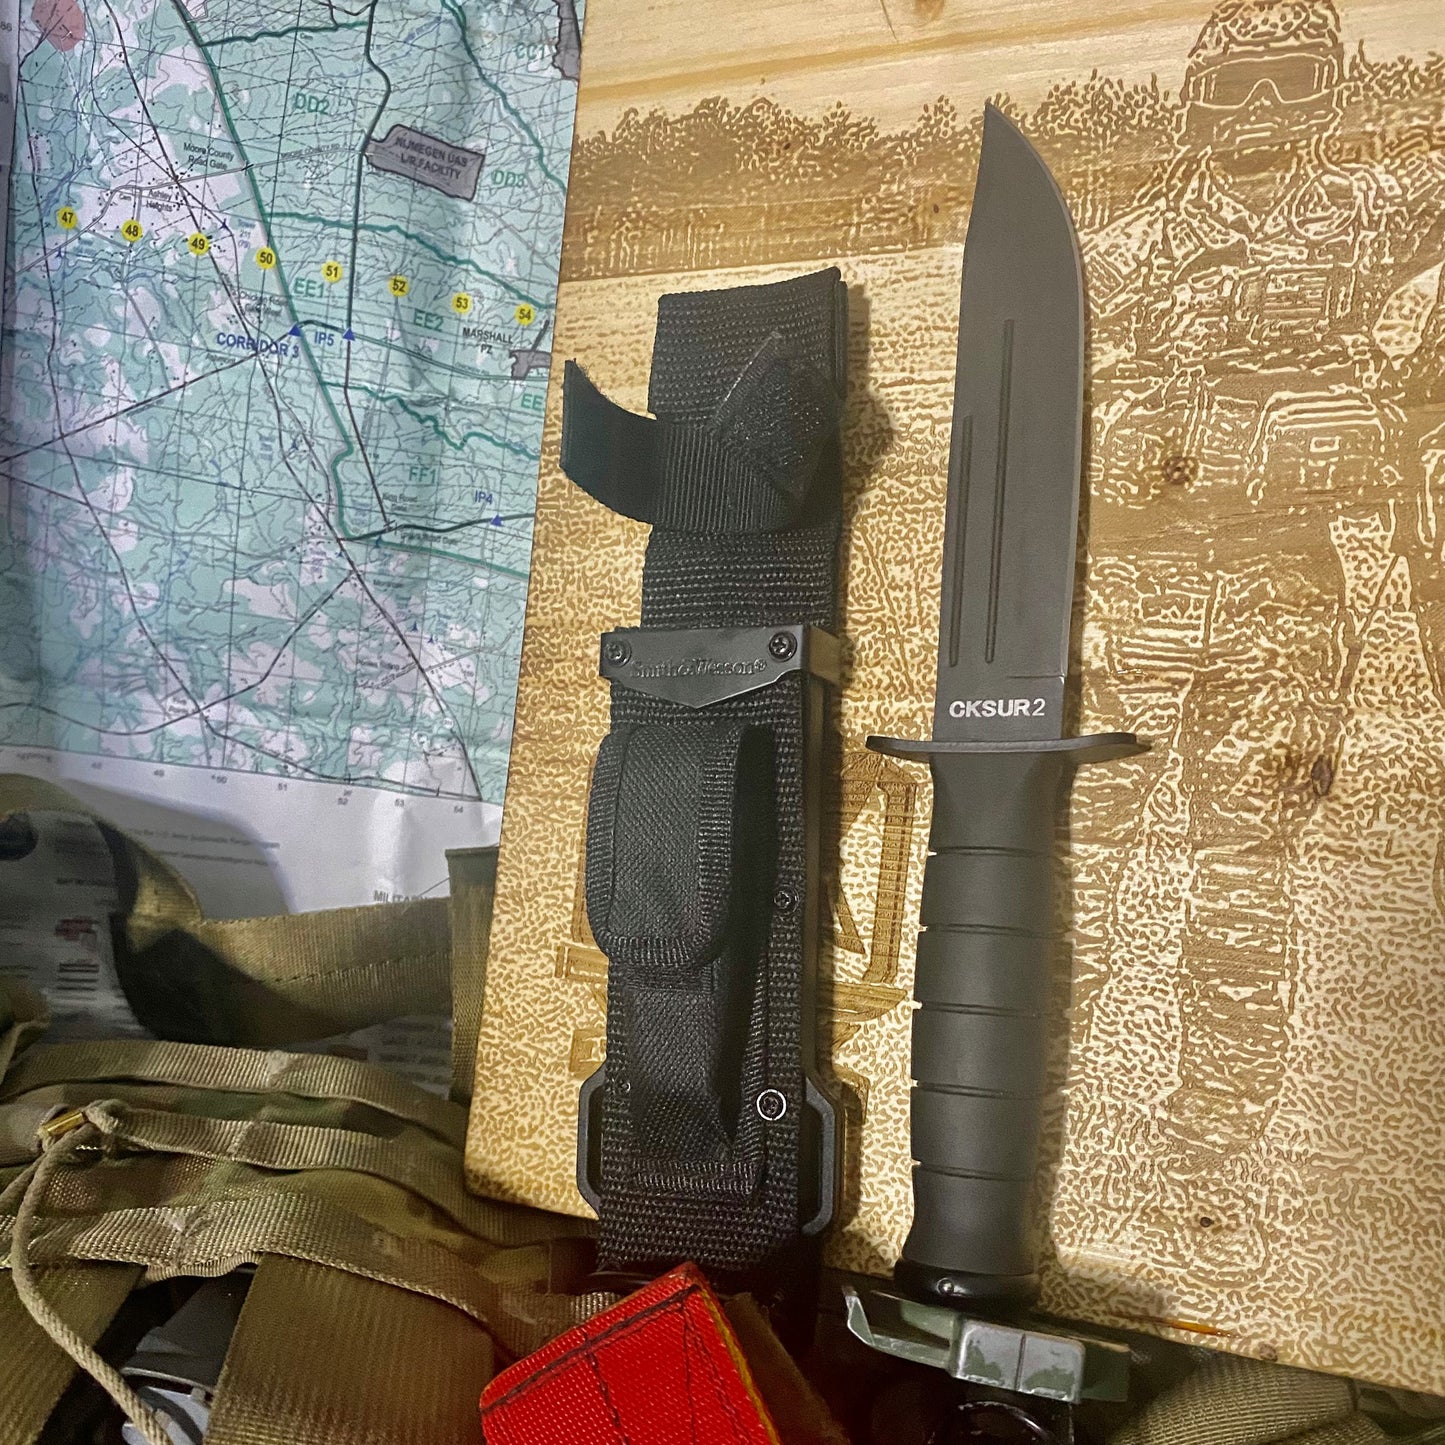 KA-BAR Style JM USA Knife